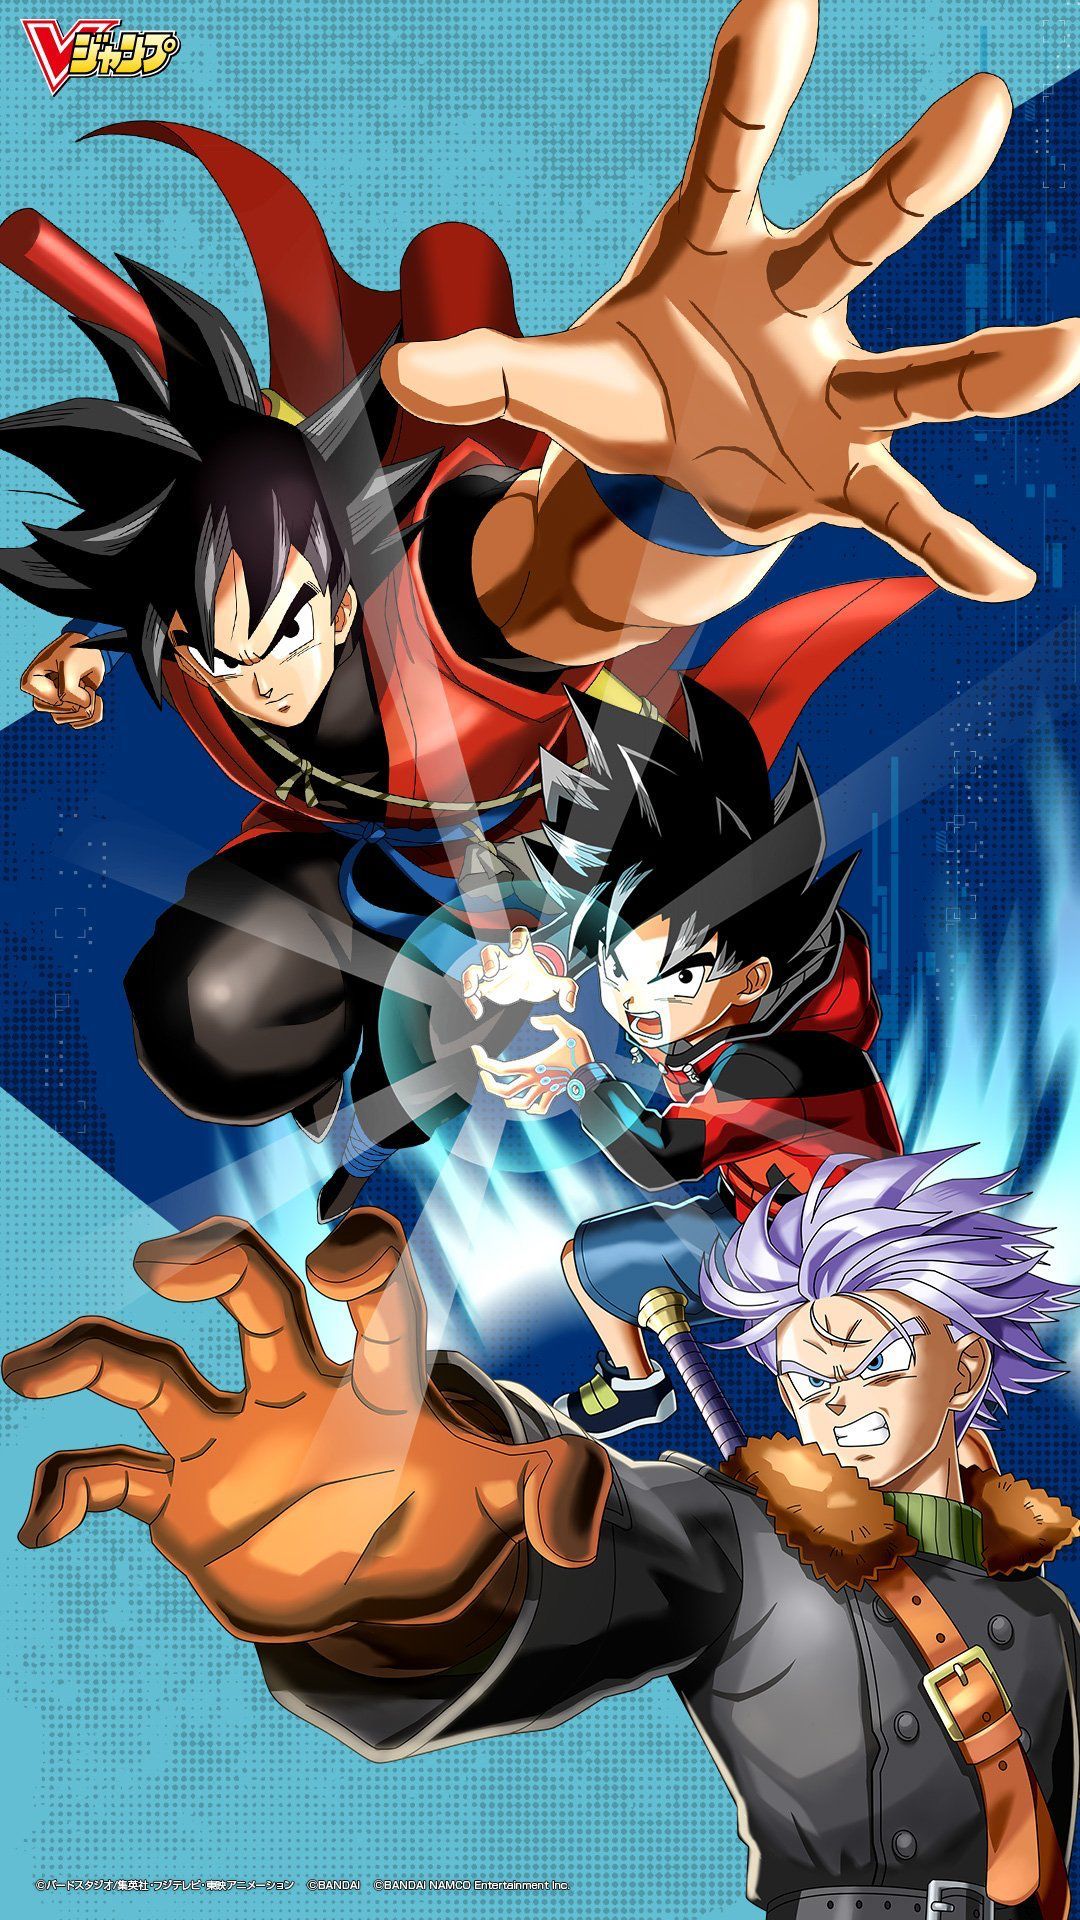 Super Dragon Ball Heroes WORLD MISSION. Dragon ball super manga, Dragon ball super wallpaper, Anime dragon ball